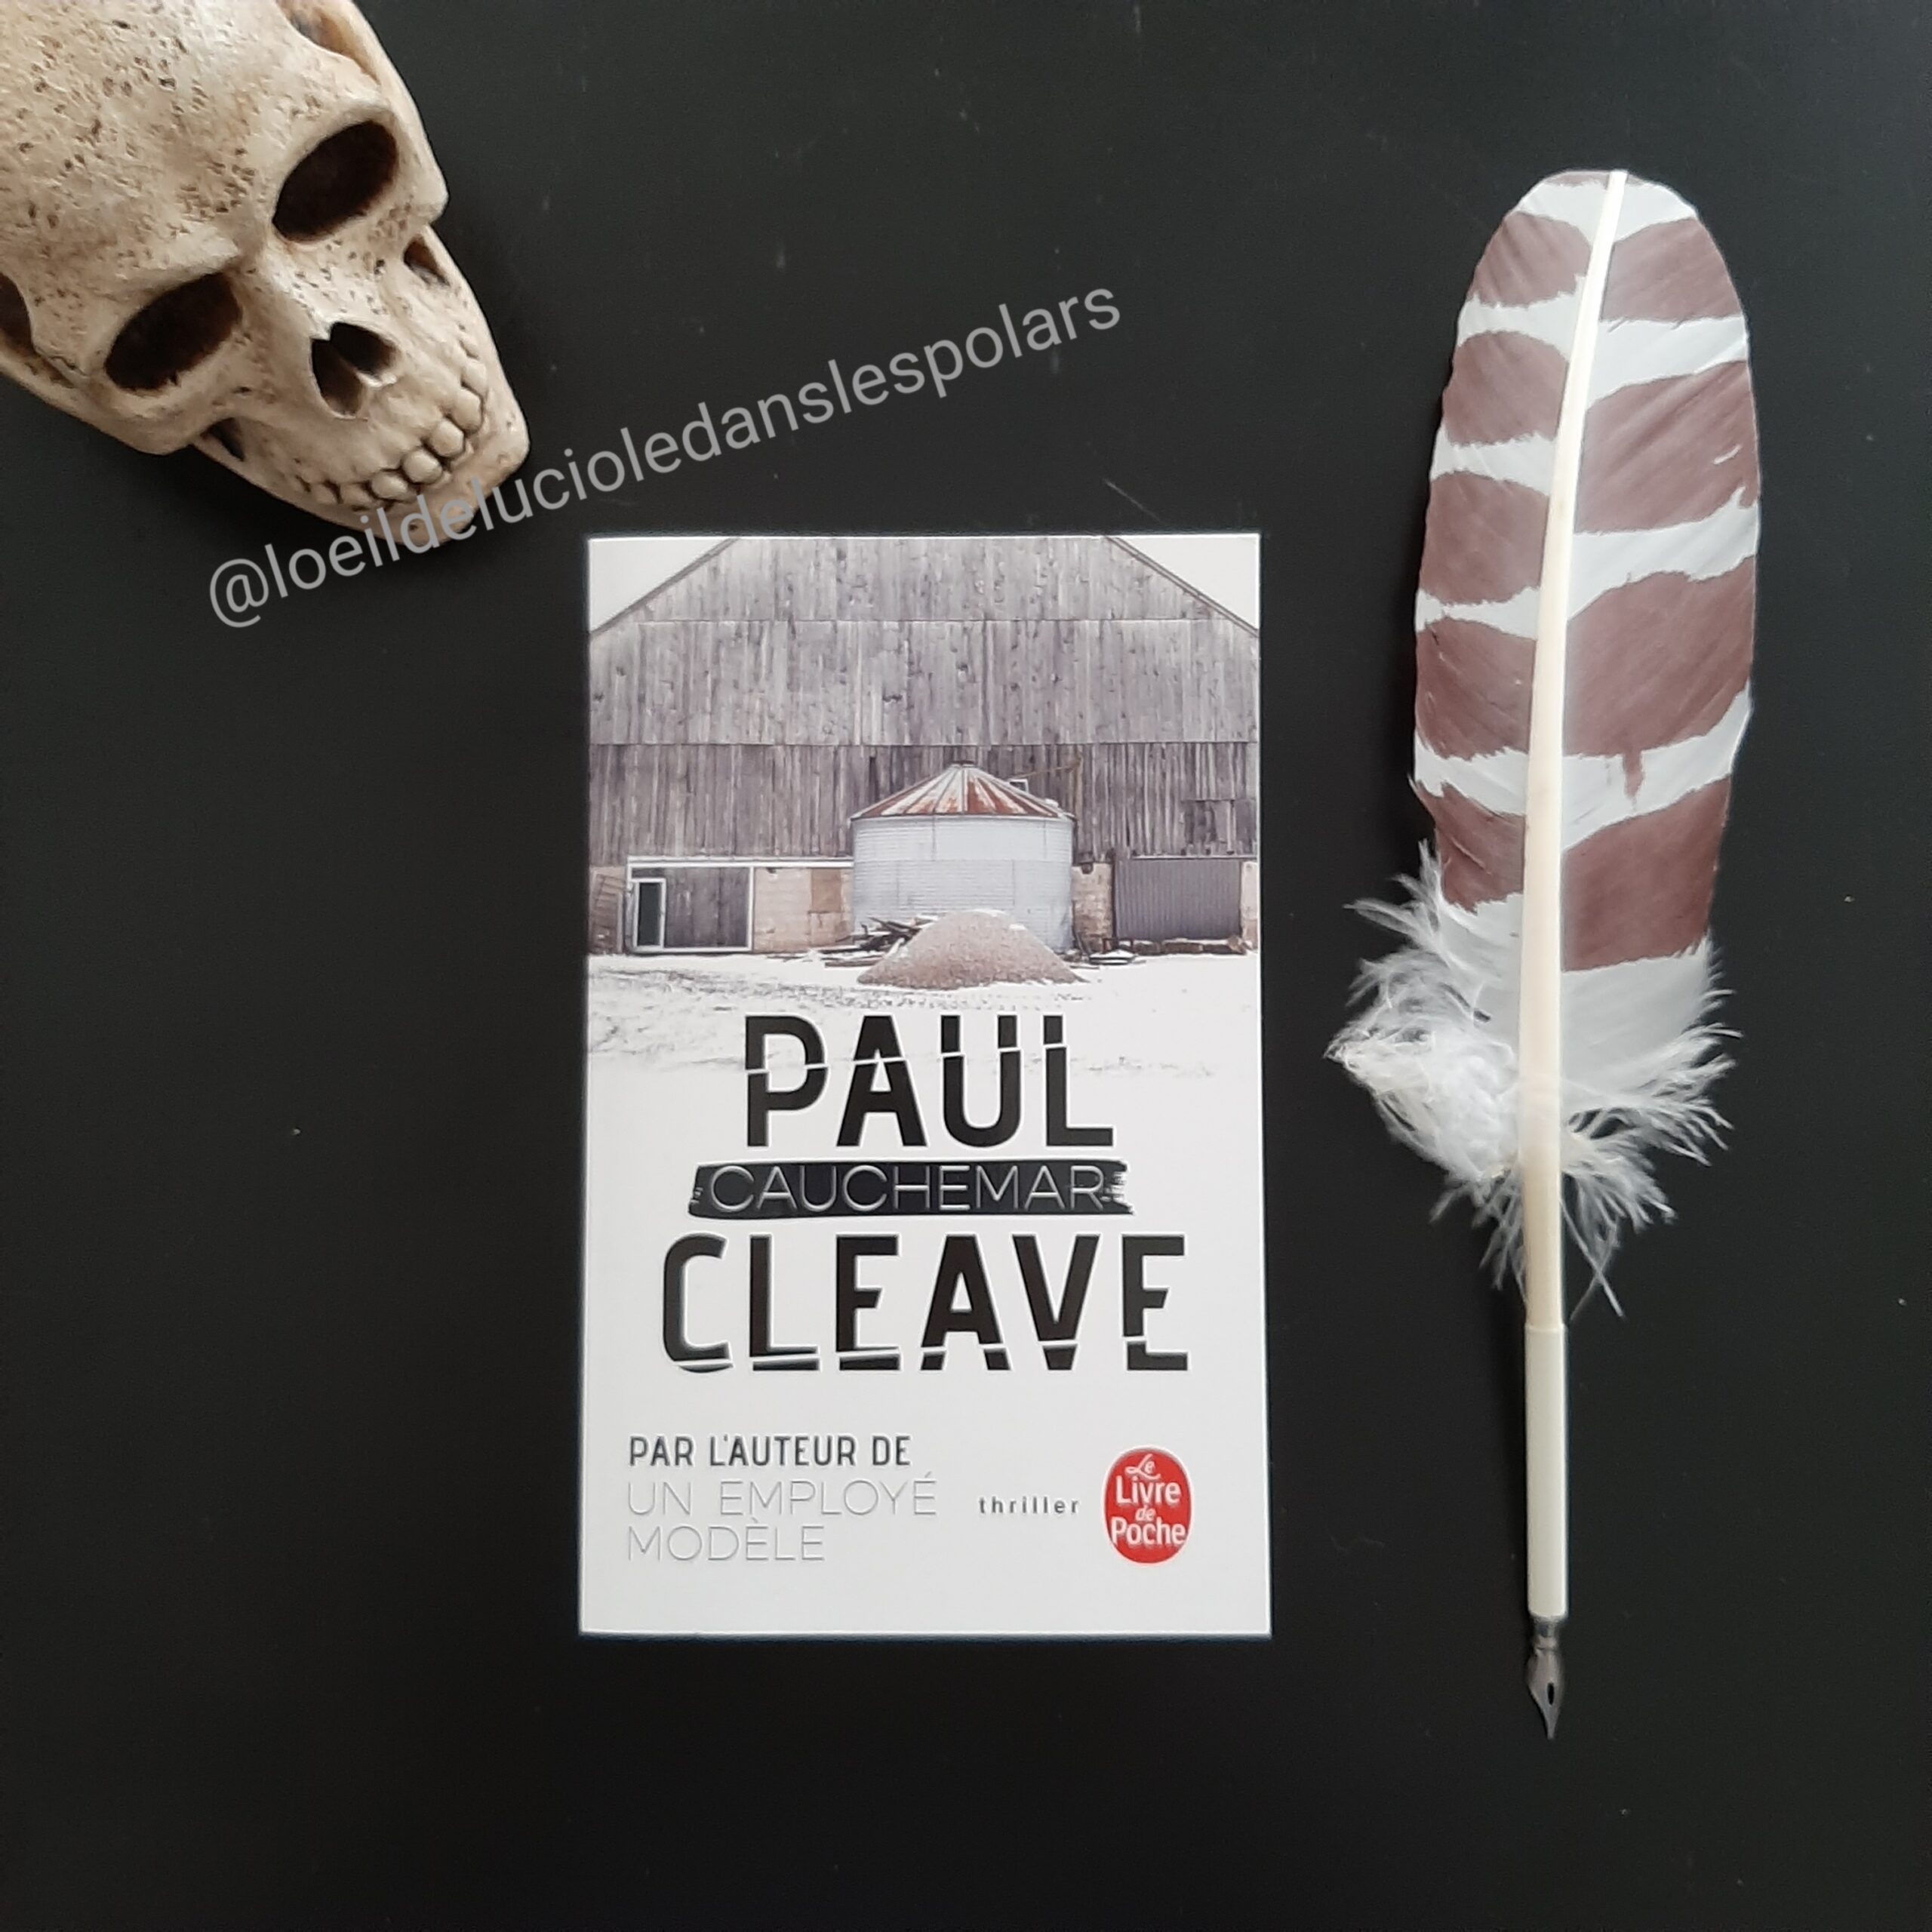 Cauchemar de Paul Cleave